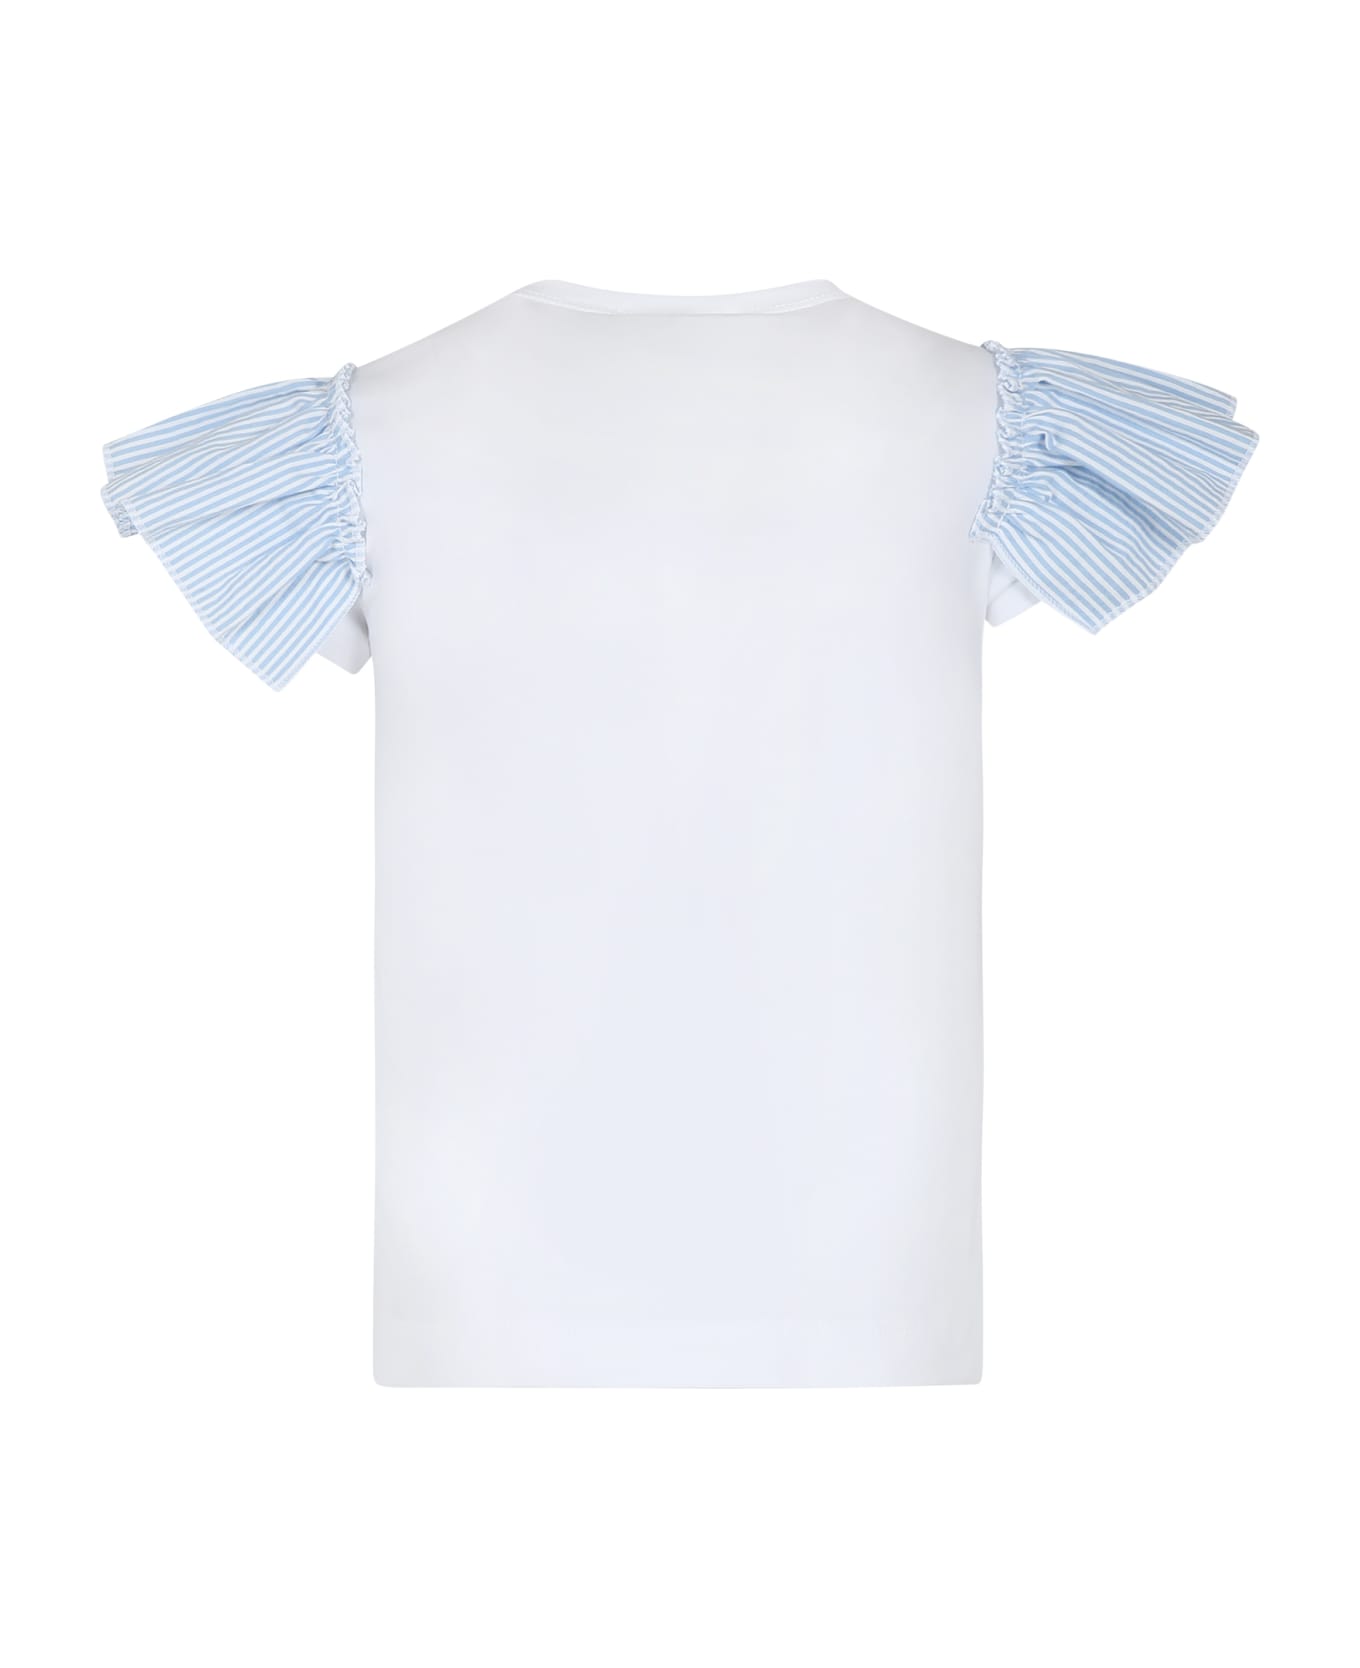 Monnalisa White T-shirt For Girl With Light Blue Hearts - White